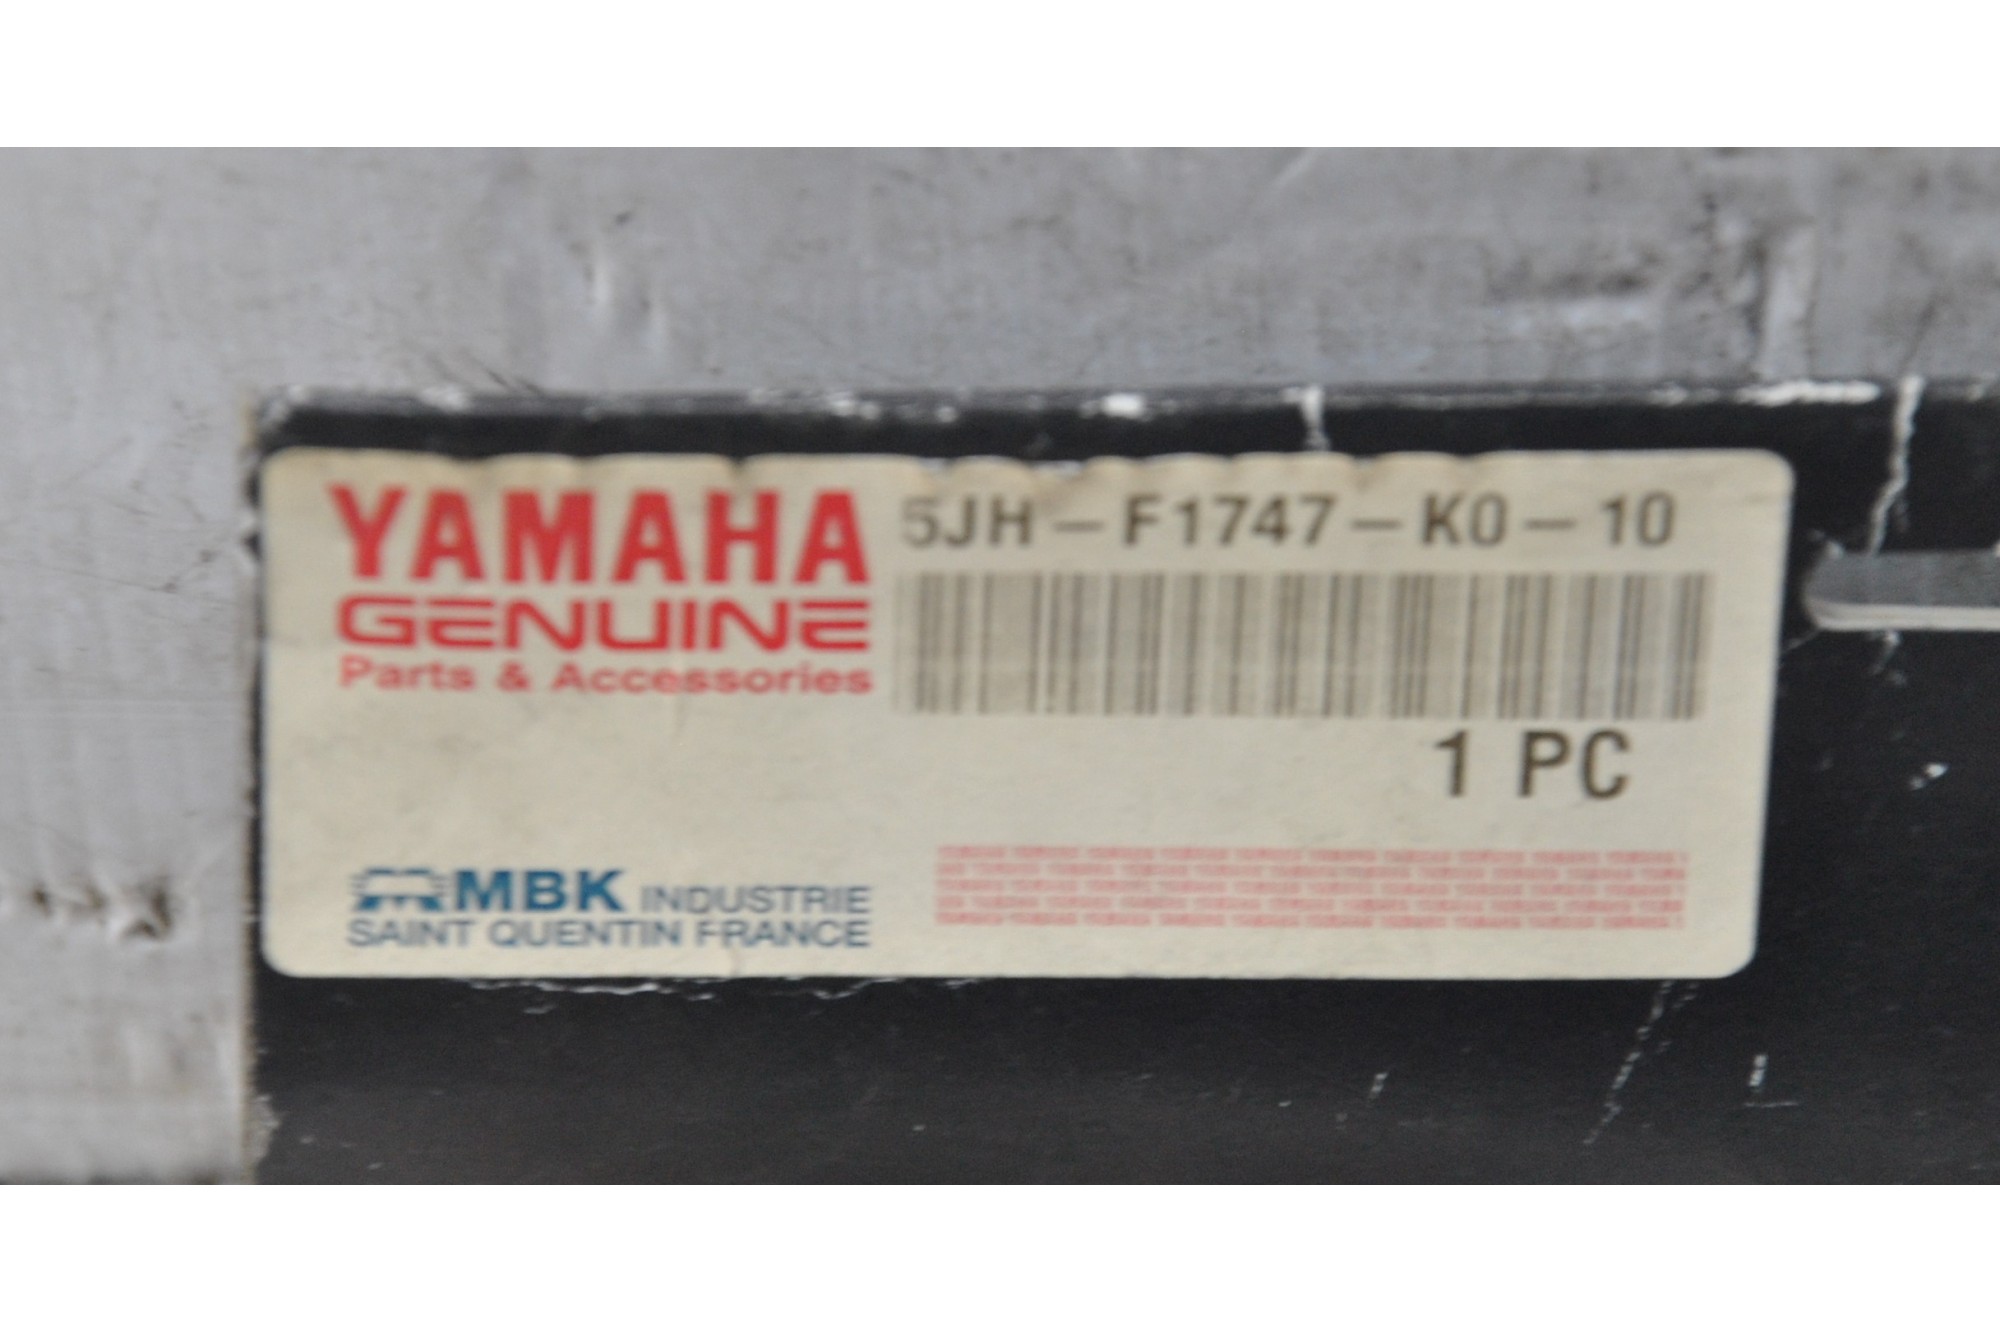 Protezione Laterale in simil Carbonio Yamaha Slider 50 / MBK Stunt 50 dal 1999 al 2002 Cod 5JH-F1747-K0-10  1641827630330